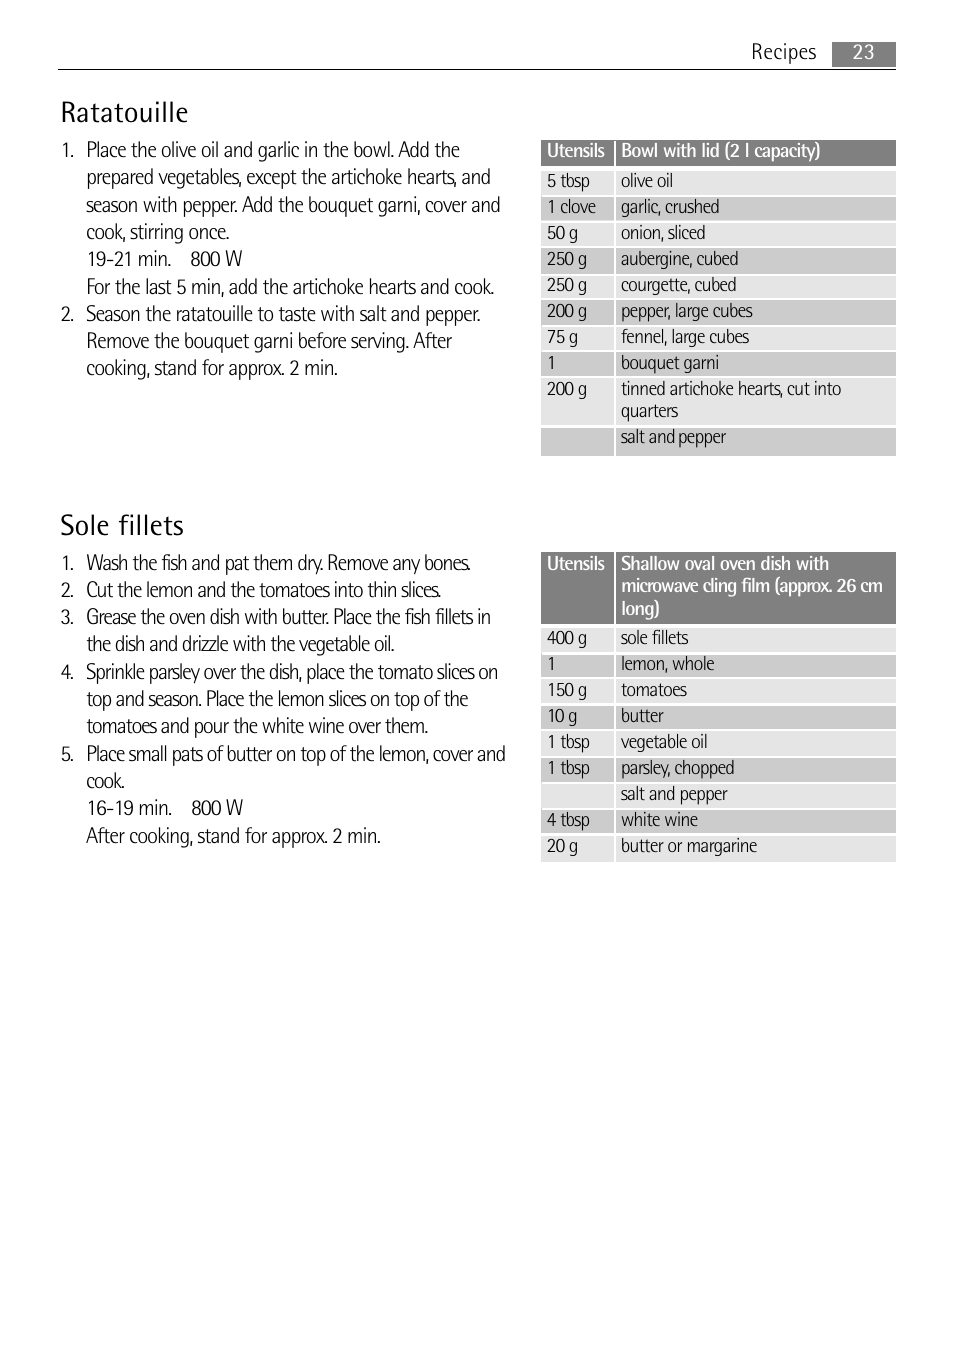 Ratatouille, Sole fillets | AEG MC2664E-W User Manual | Page 23 / 36